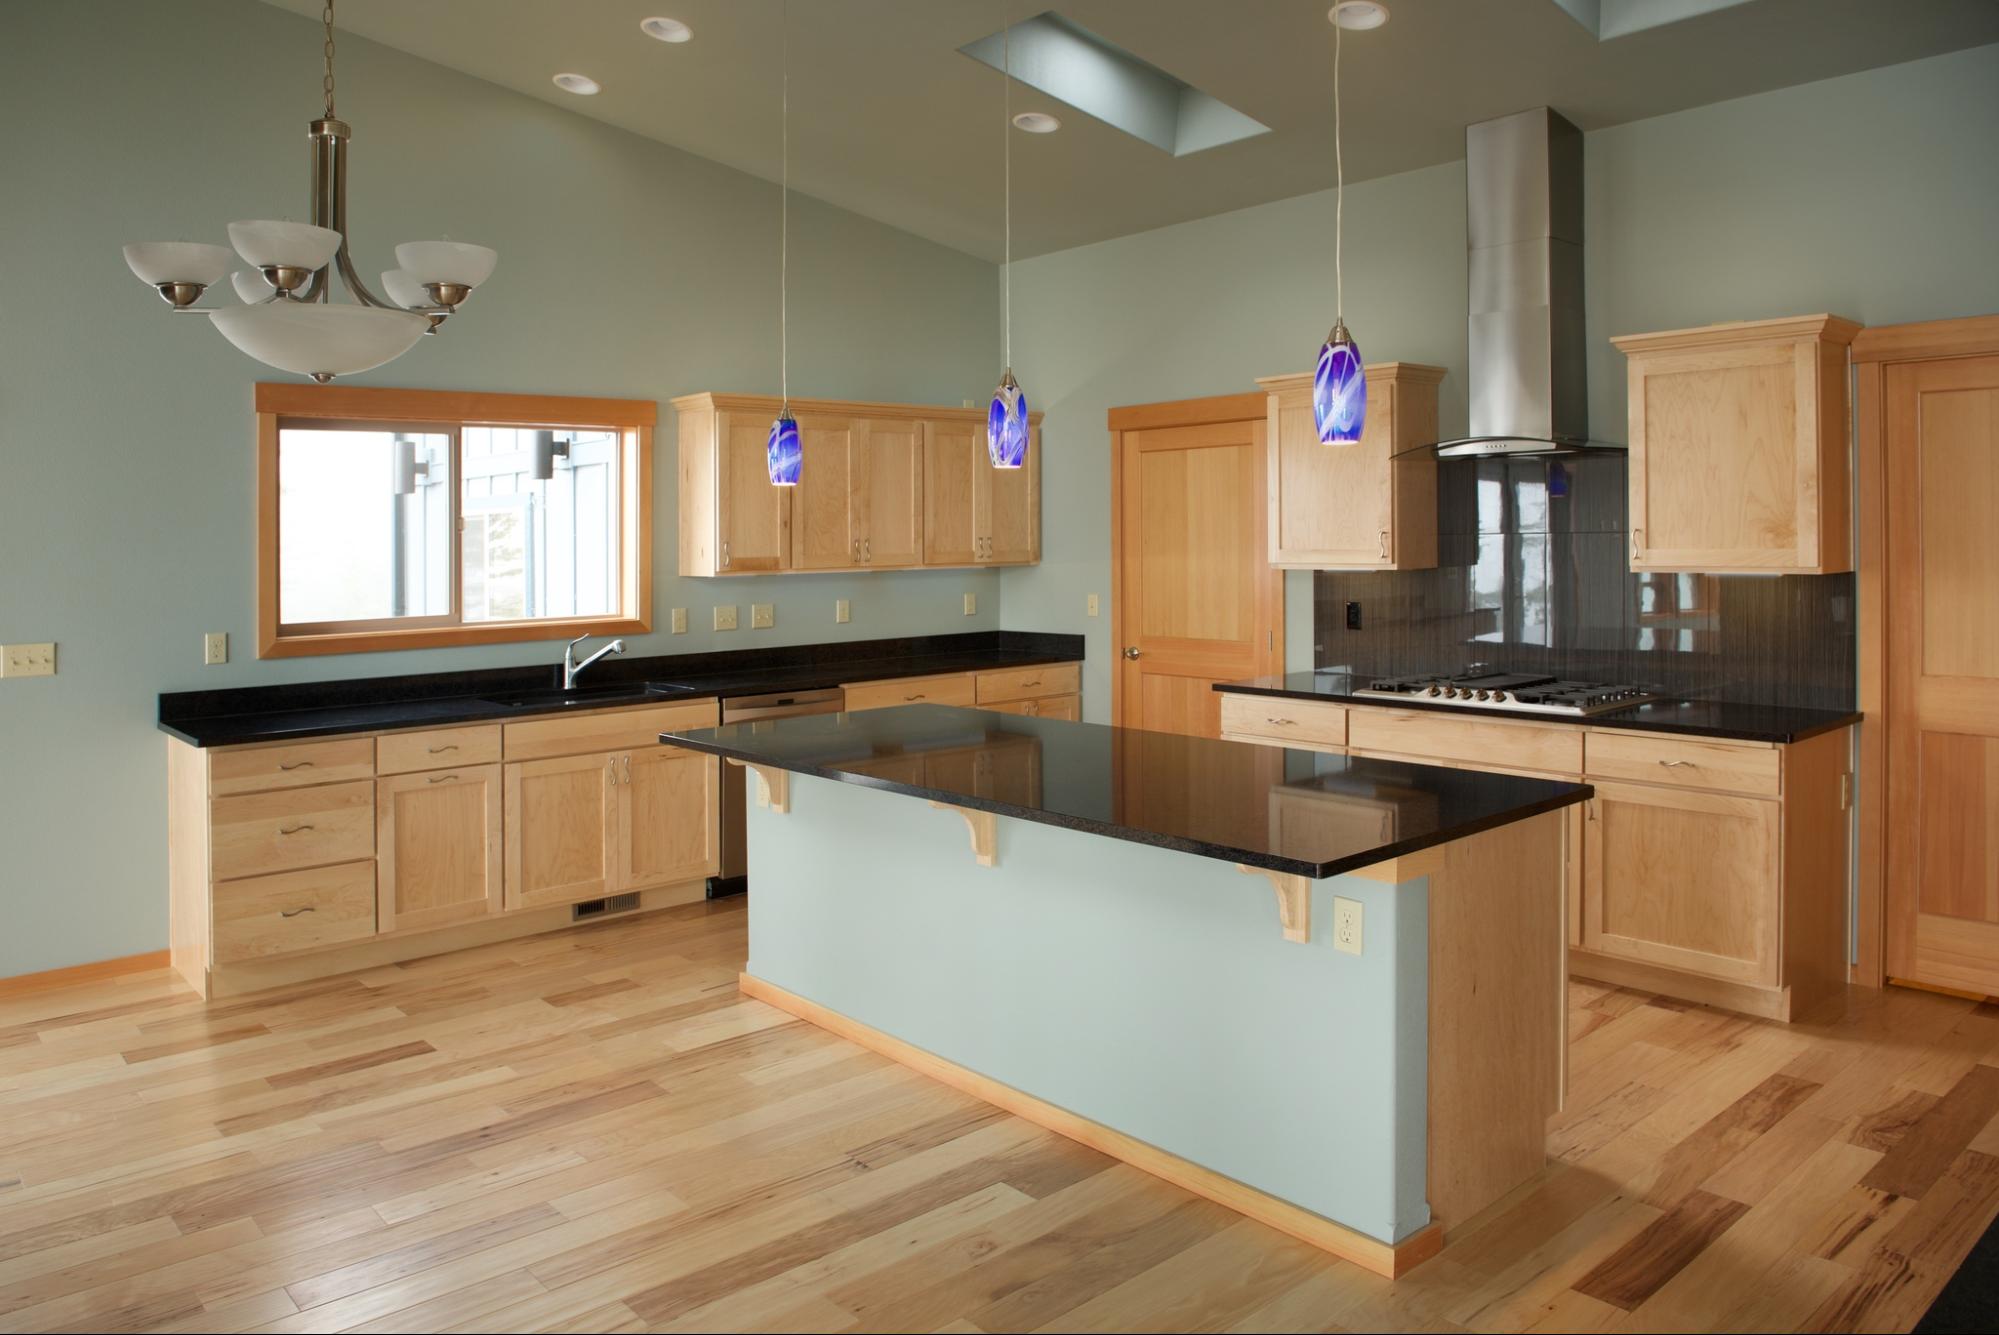 Custom Home Kitchen Design Trends: Black Counters